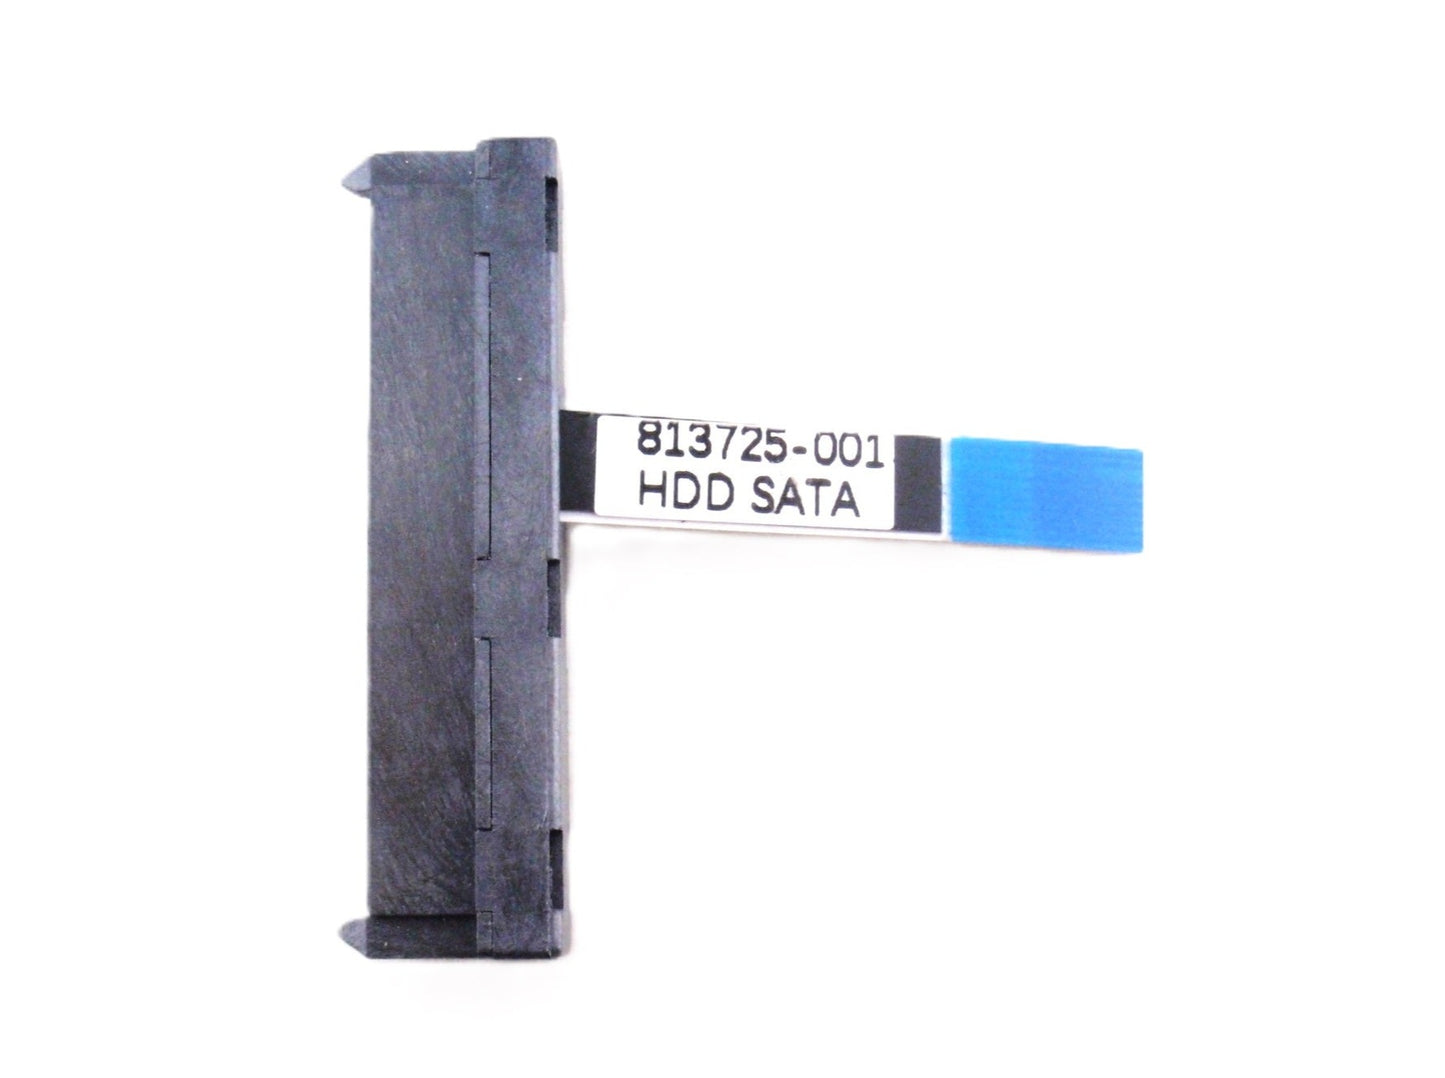 HP HDD SATA Cable EliteDesk 705 G3 ProDesk 400 600 800 G2 902746-001